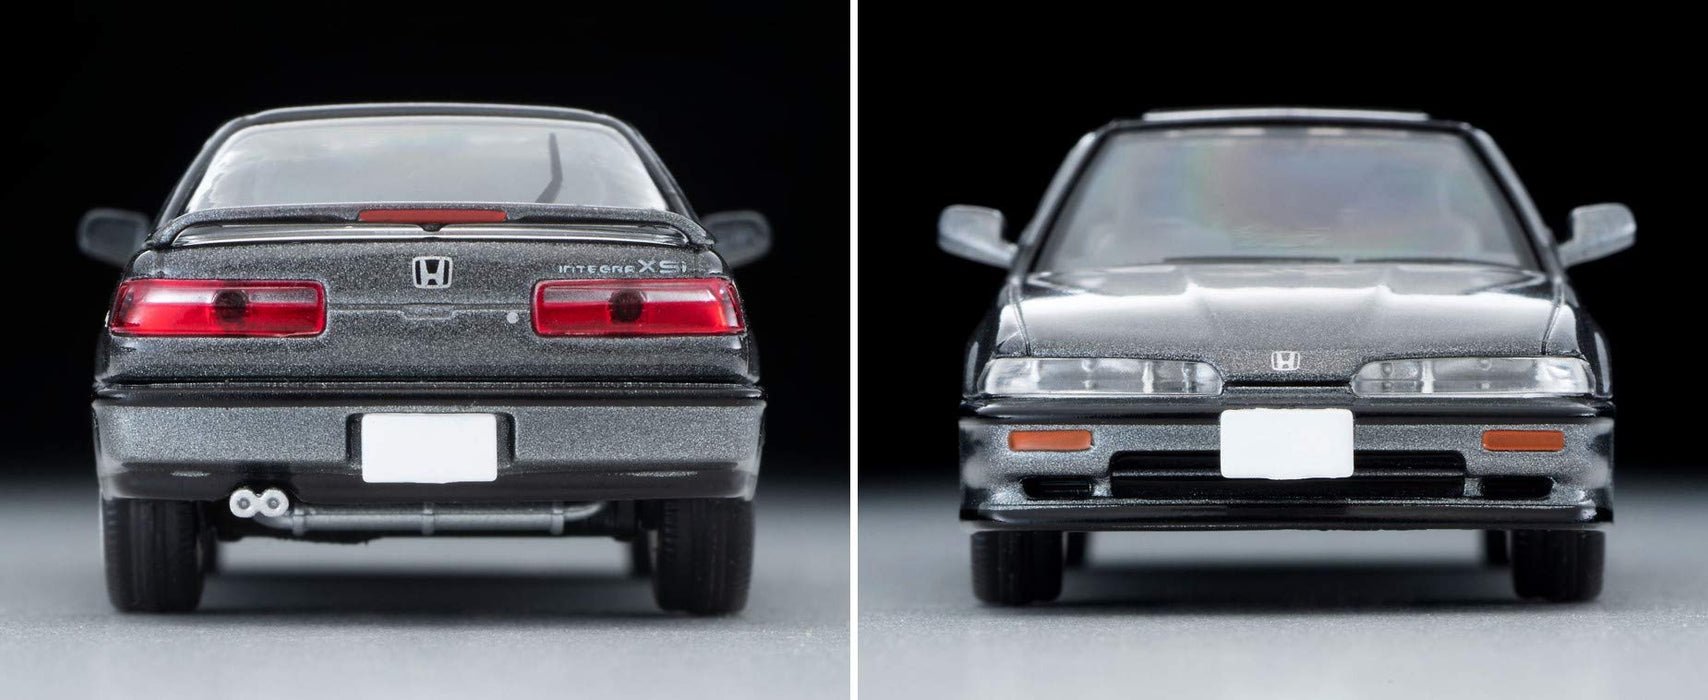 Tomytec Honda Integra Xsi Gray Metallic Limited Vintage Neo 1/64 Scale 1989 Model